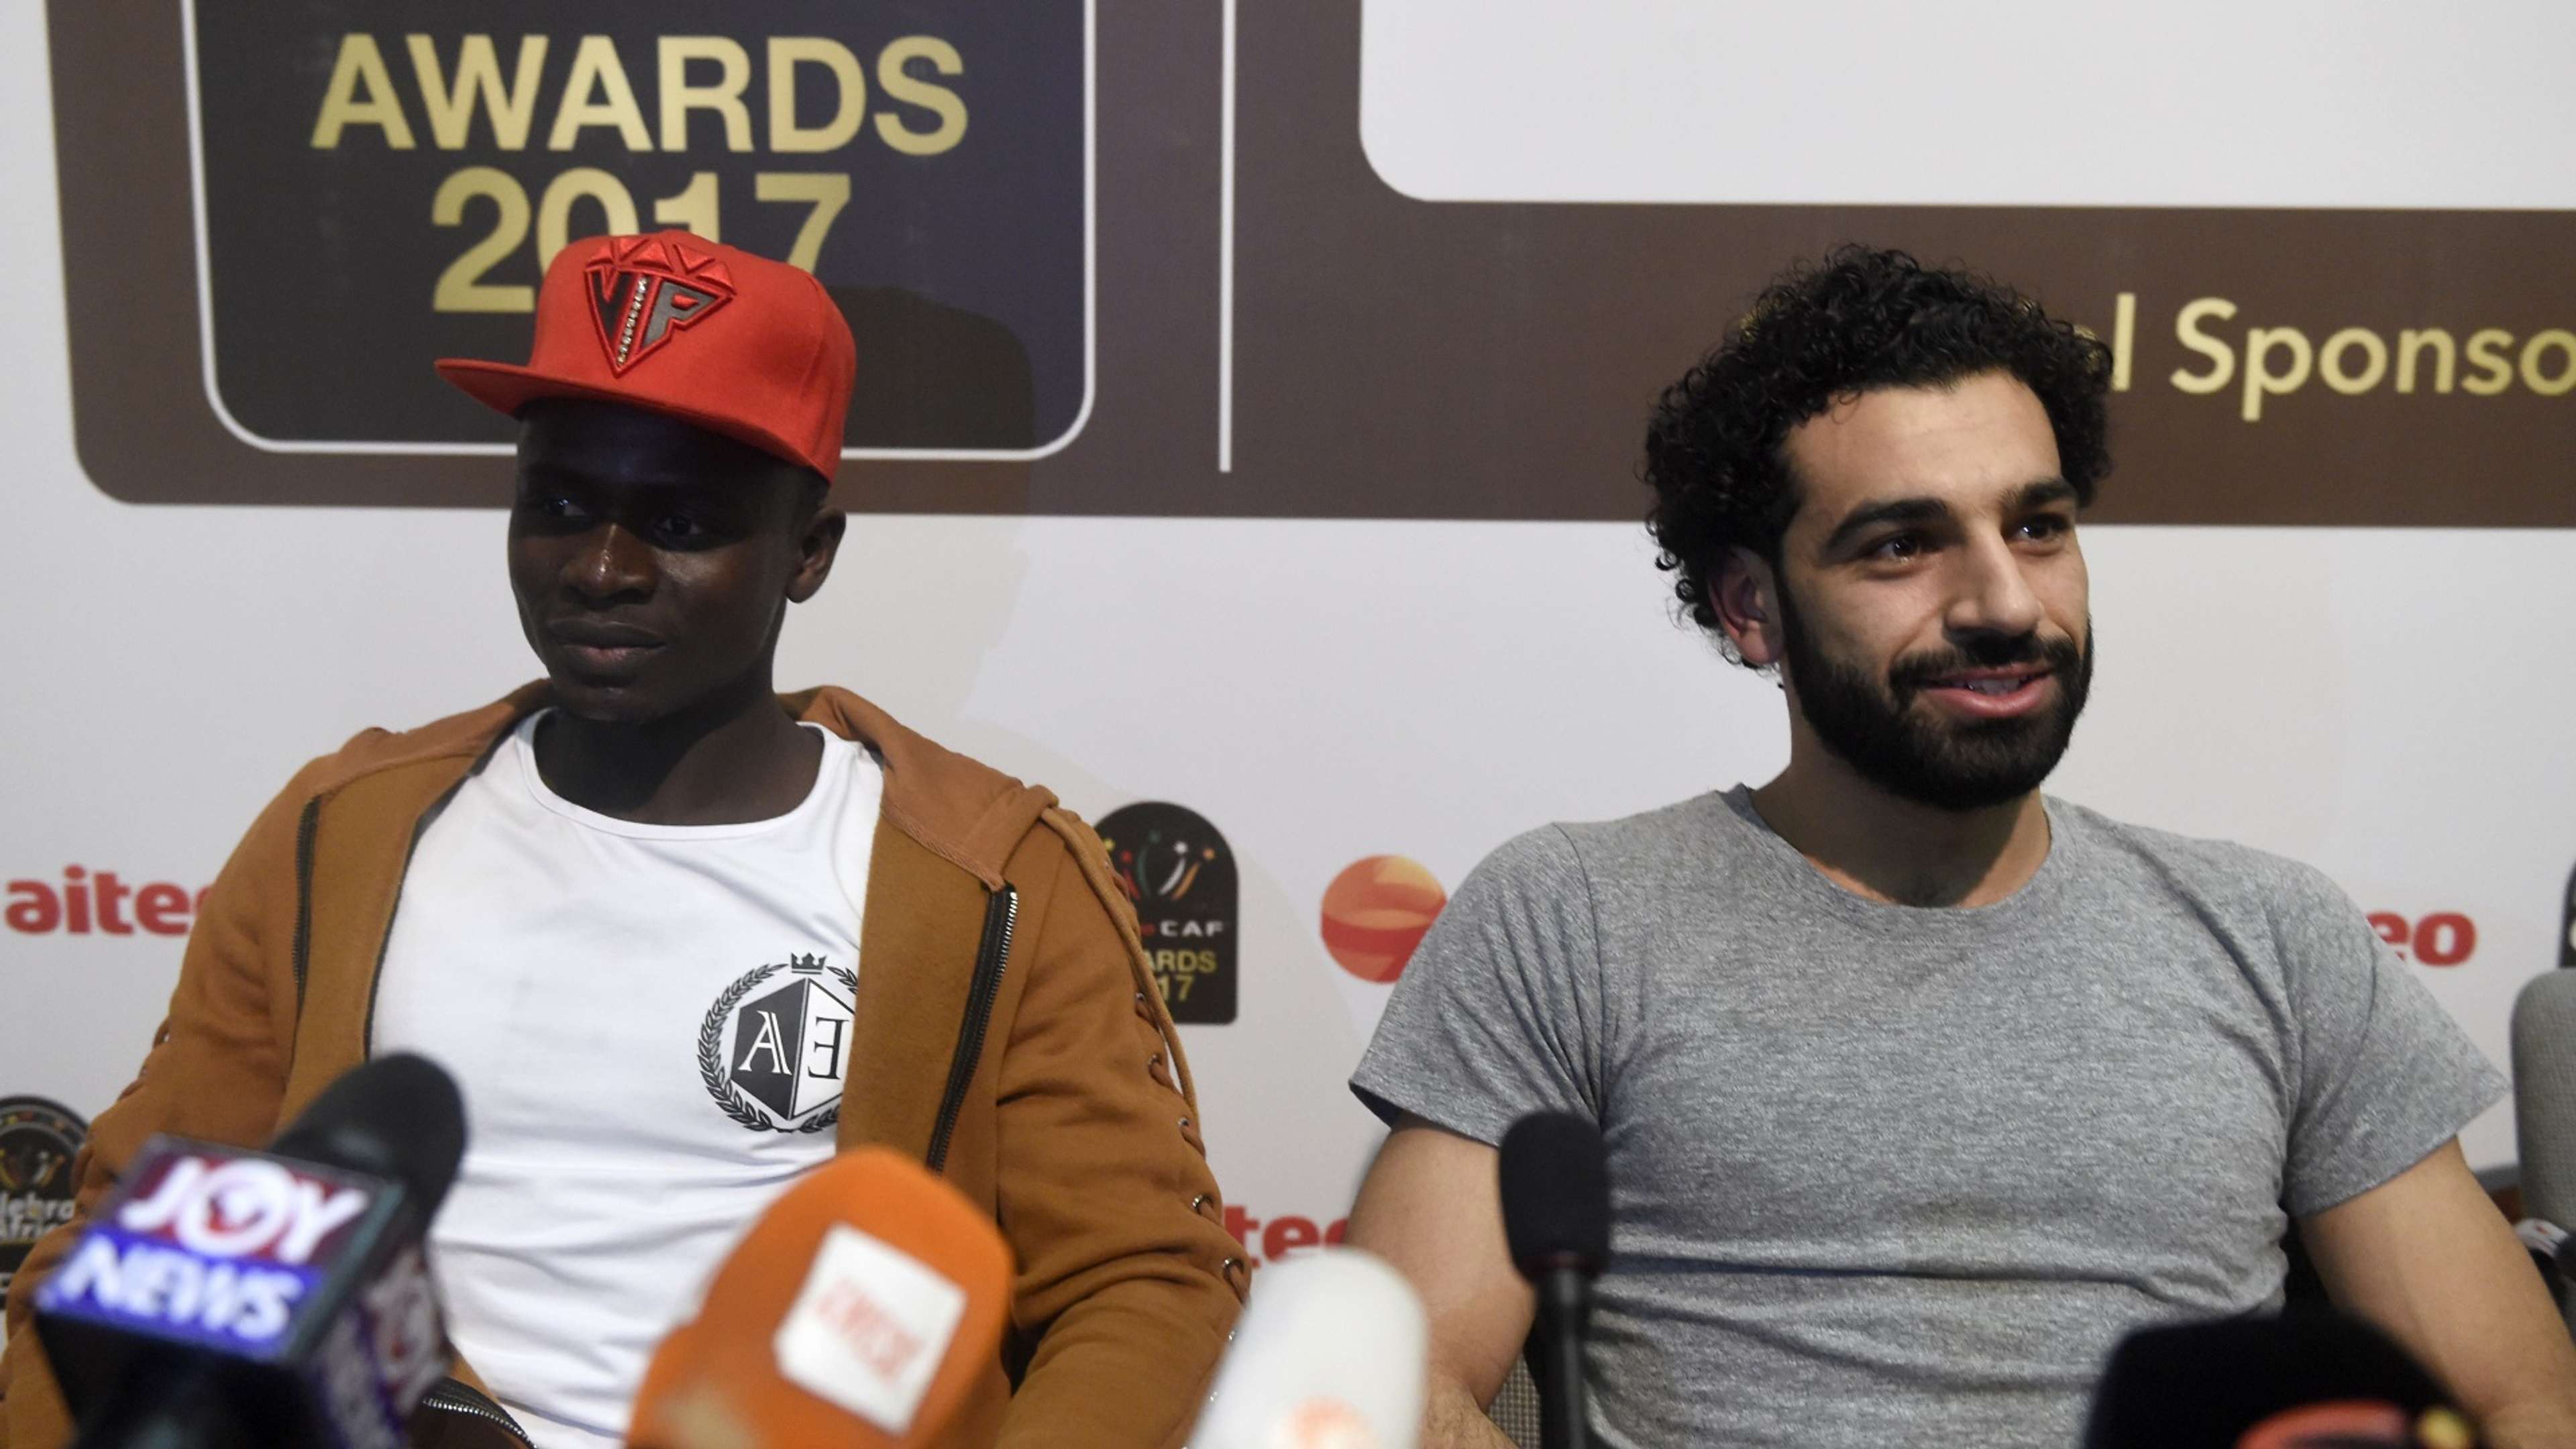 Sadio Mane and Mohamed Salah